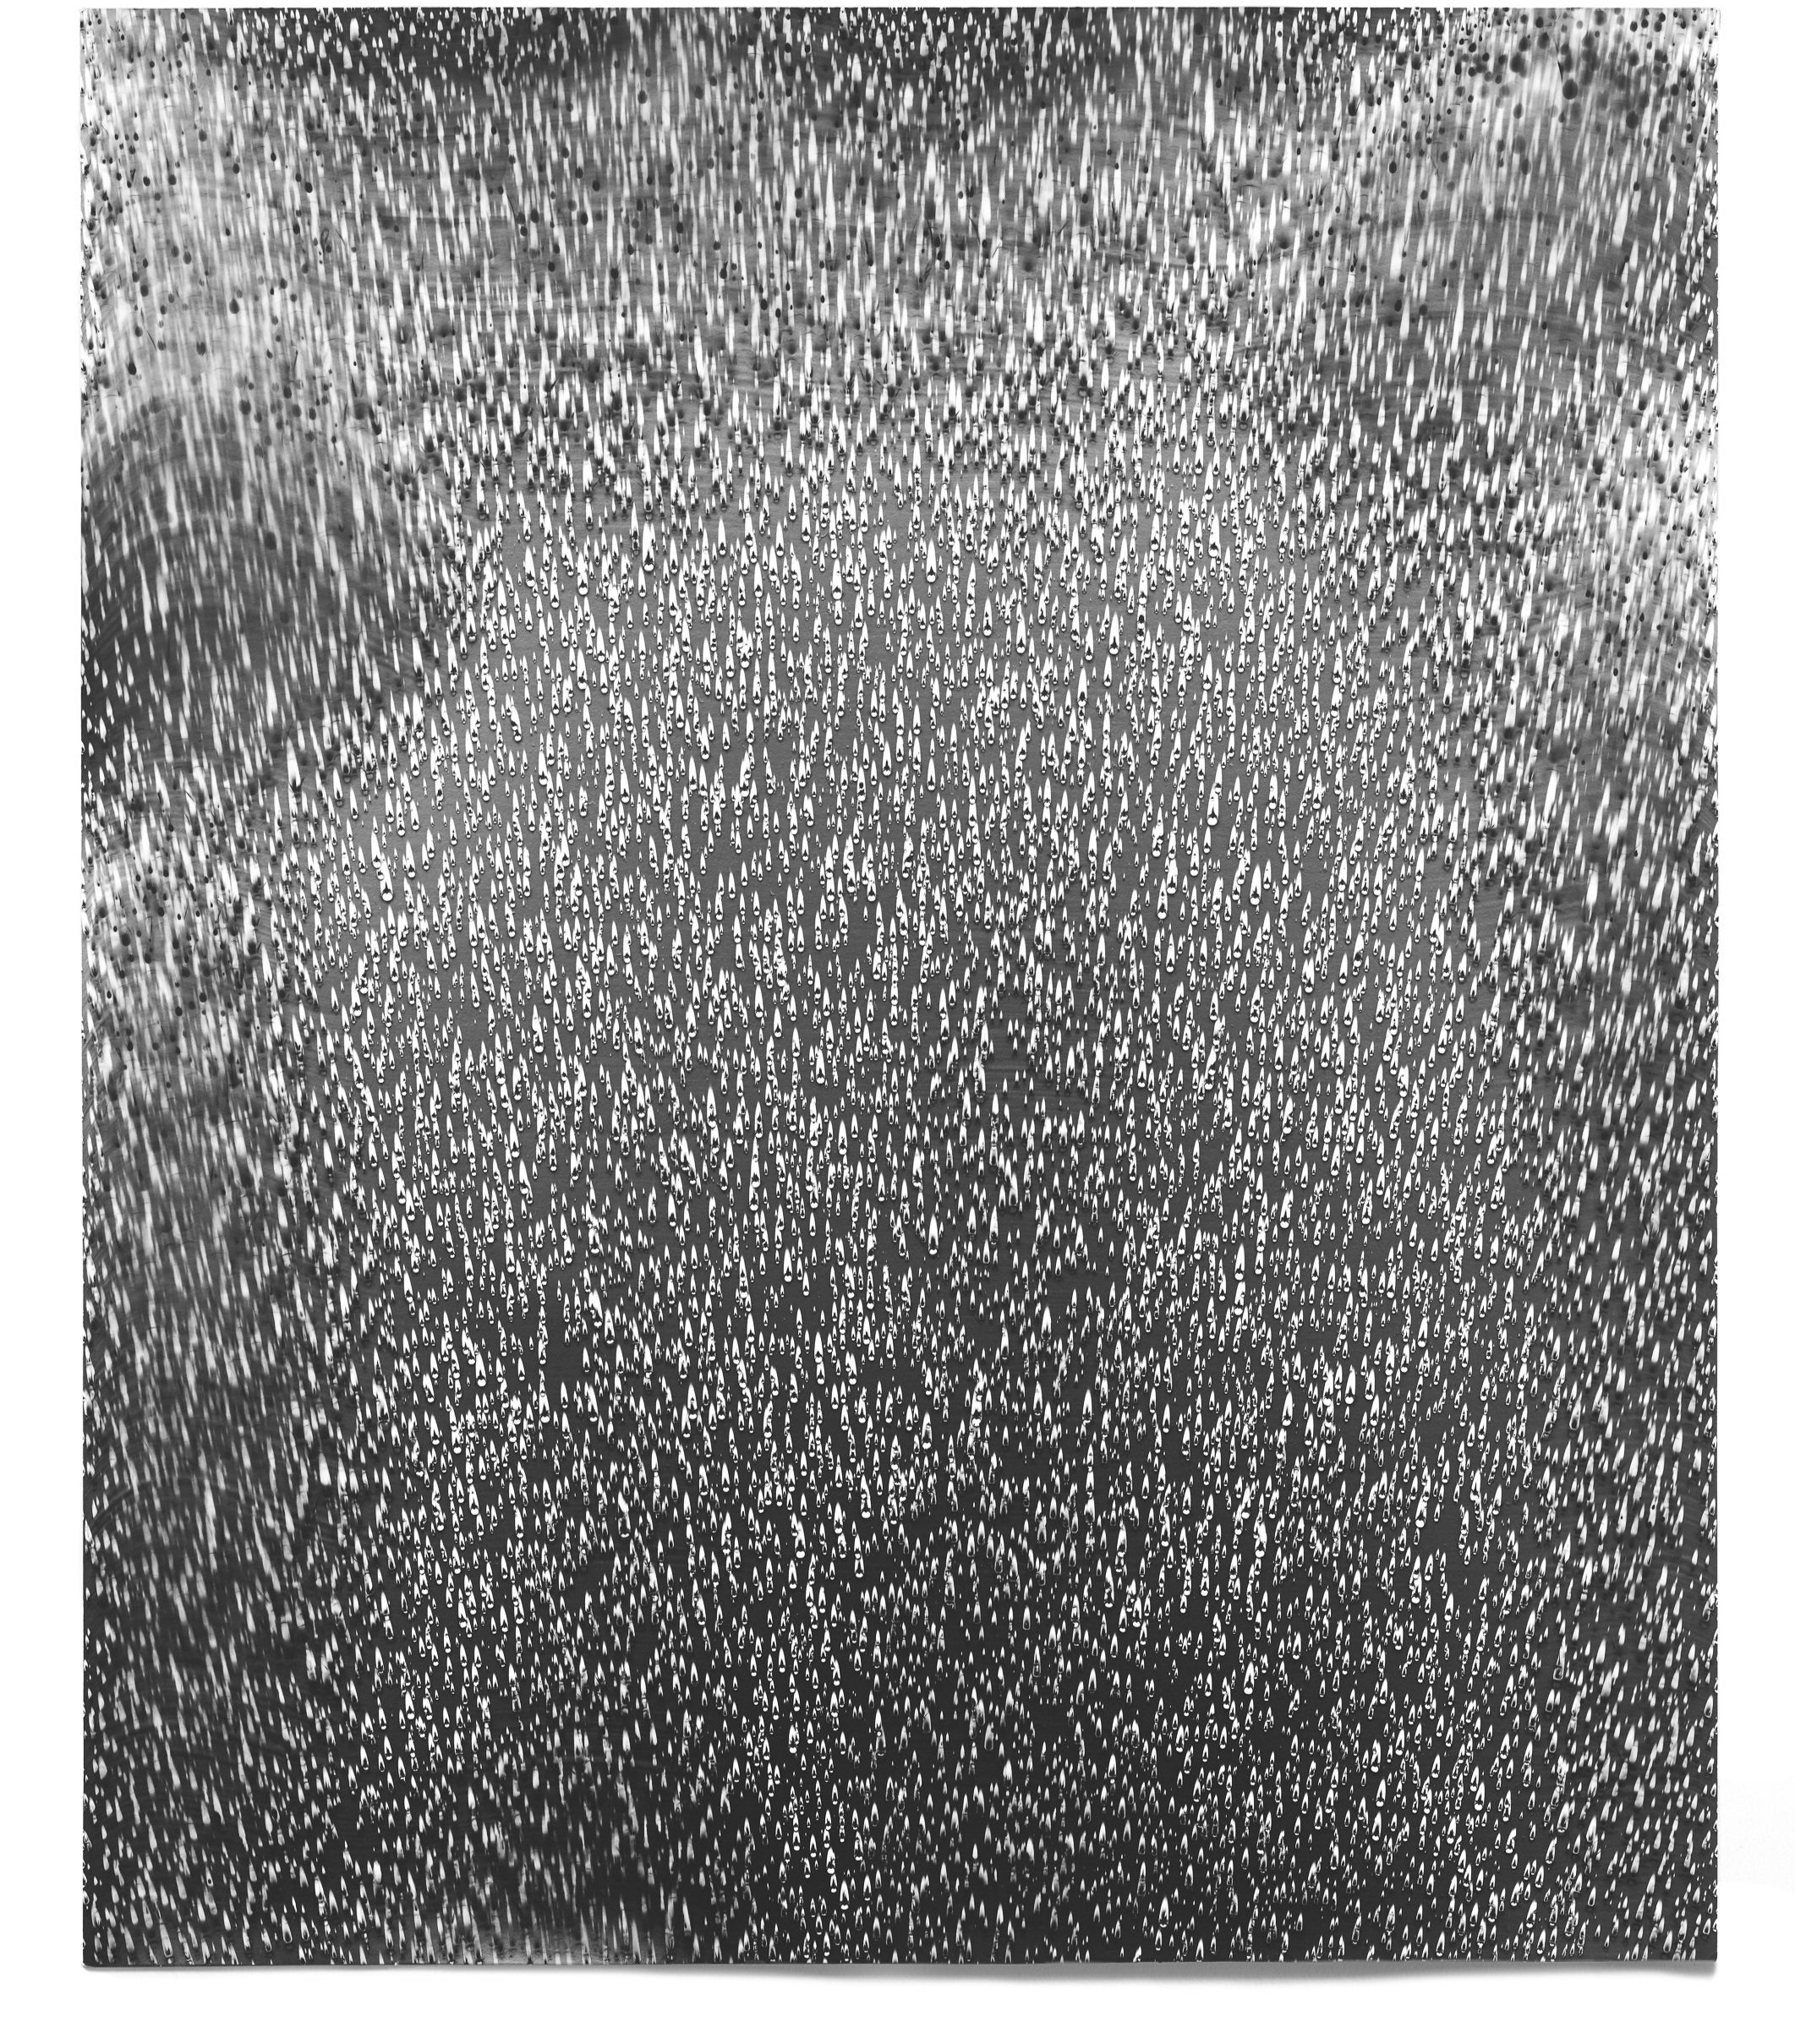   Rain Study (Kona 84),  2015   Silver gelatin photogram 24 x 20 in 